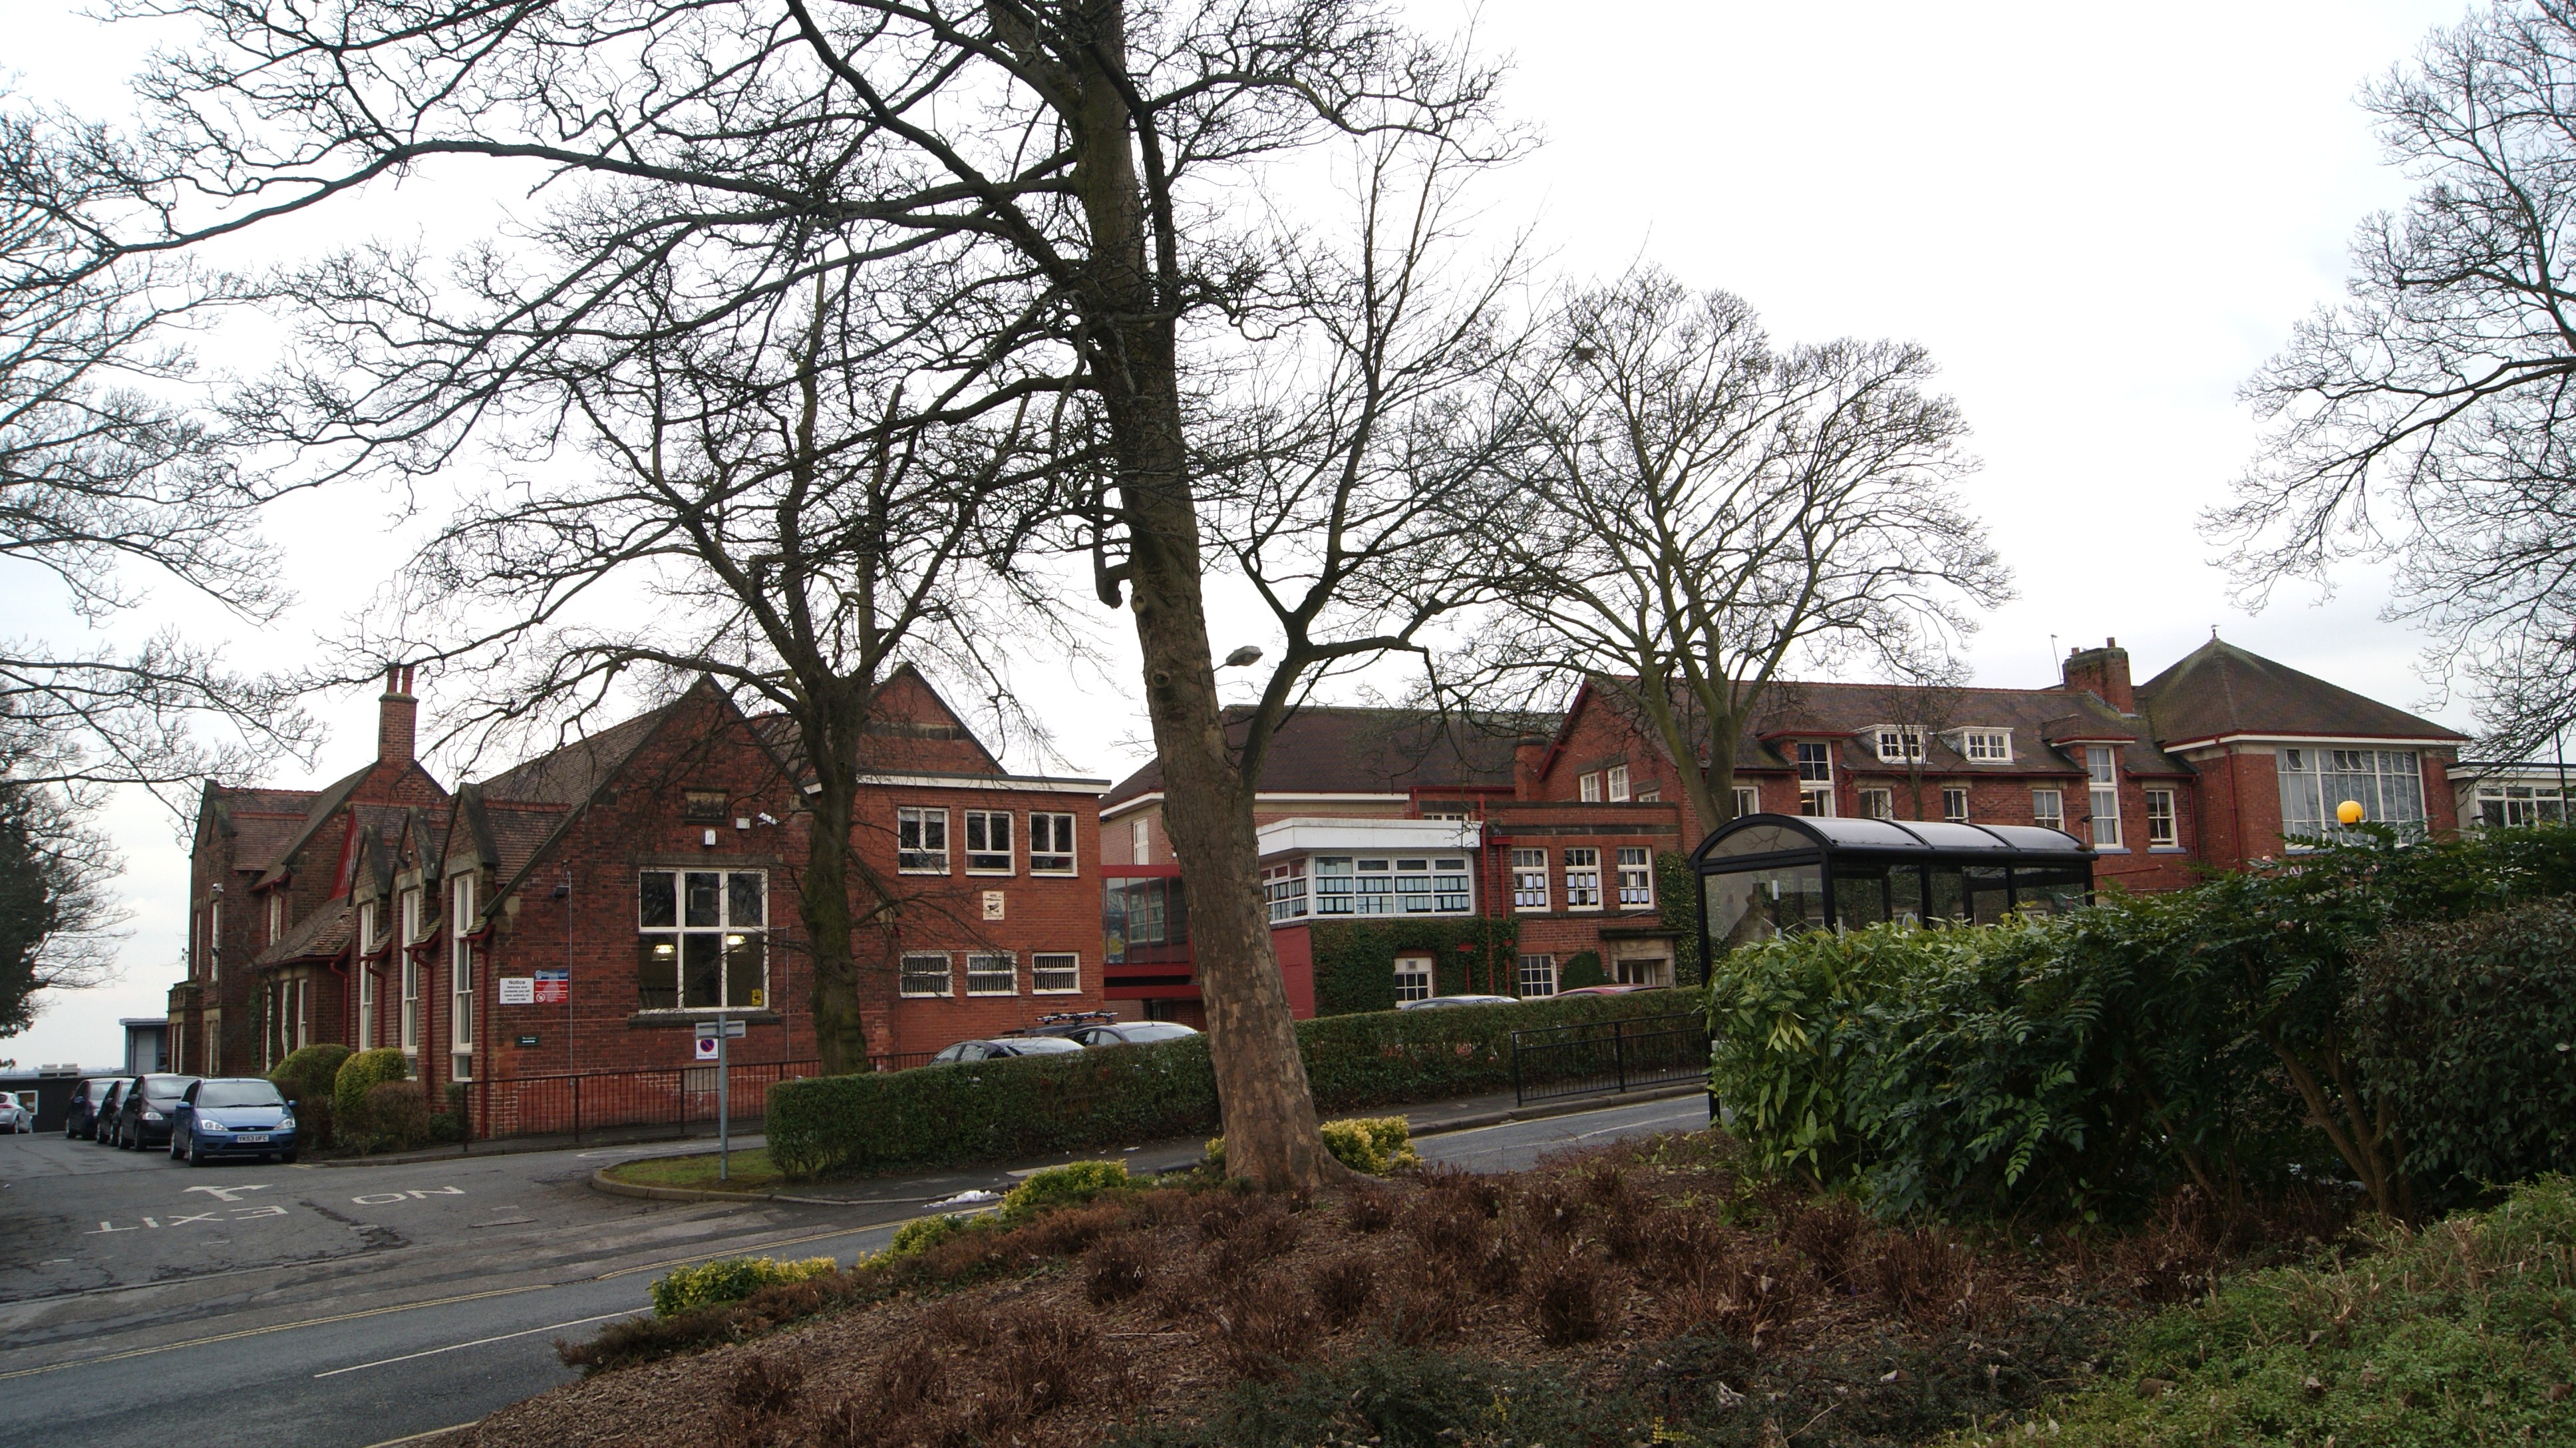 King James's School, Knaresborough